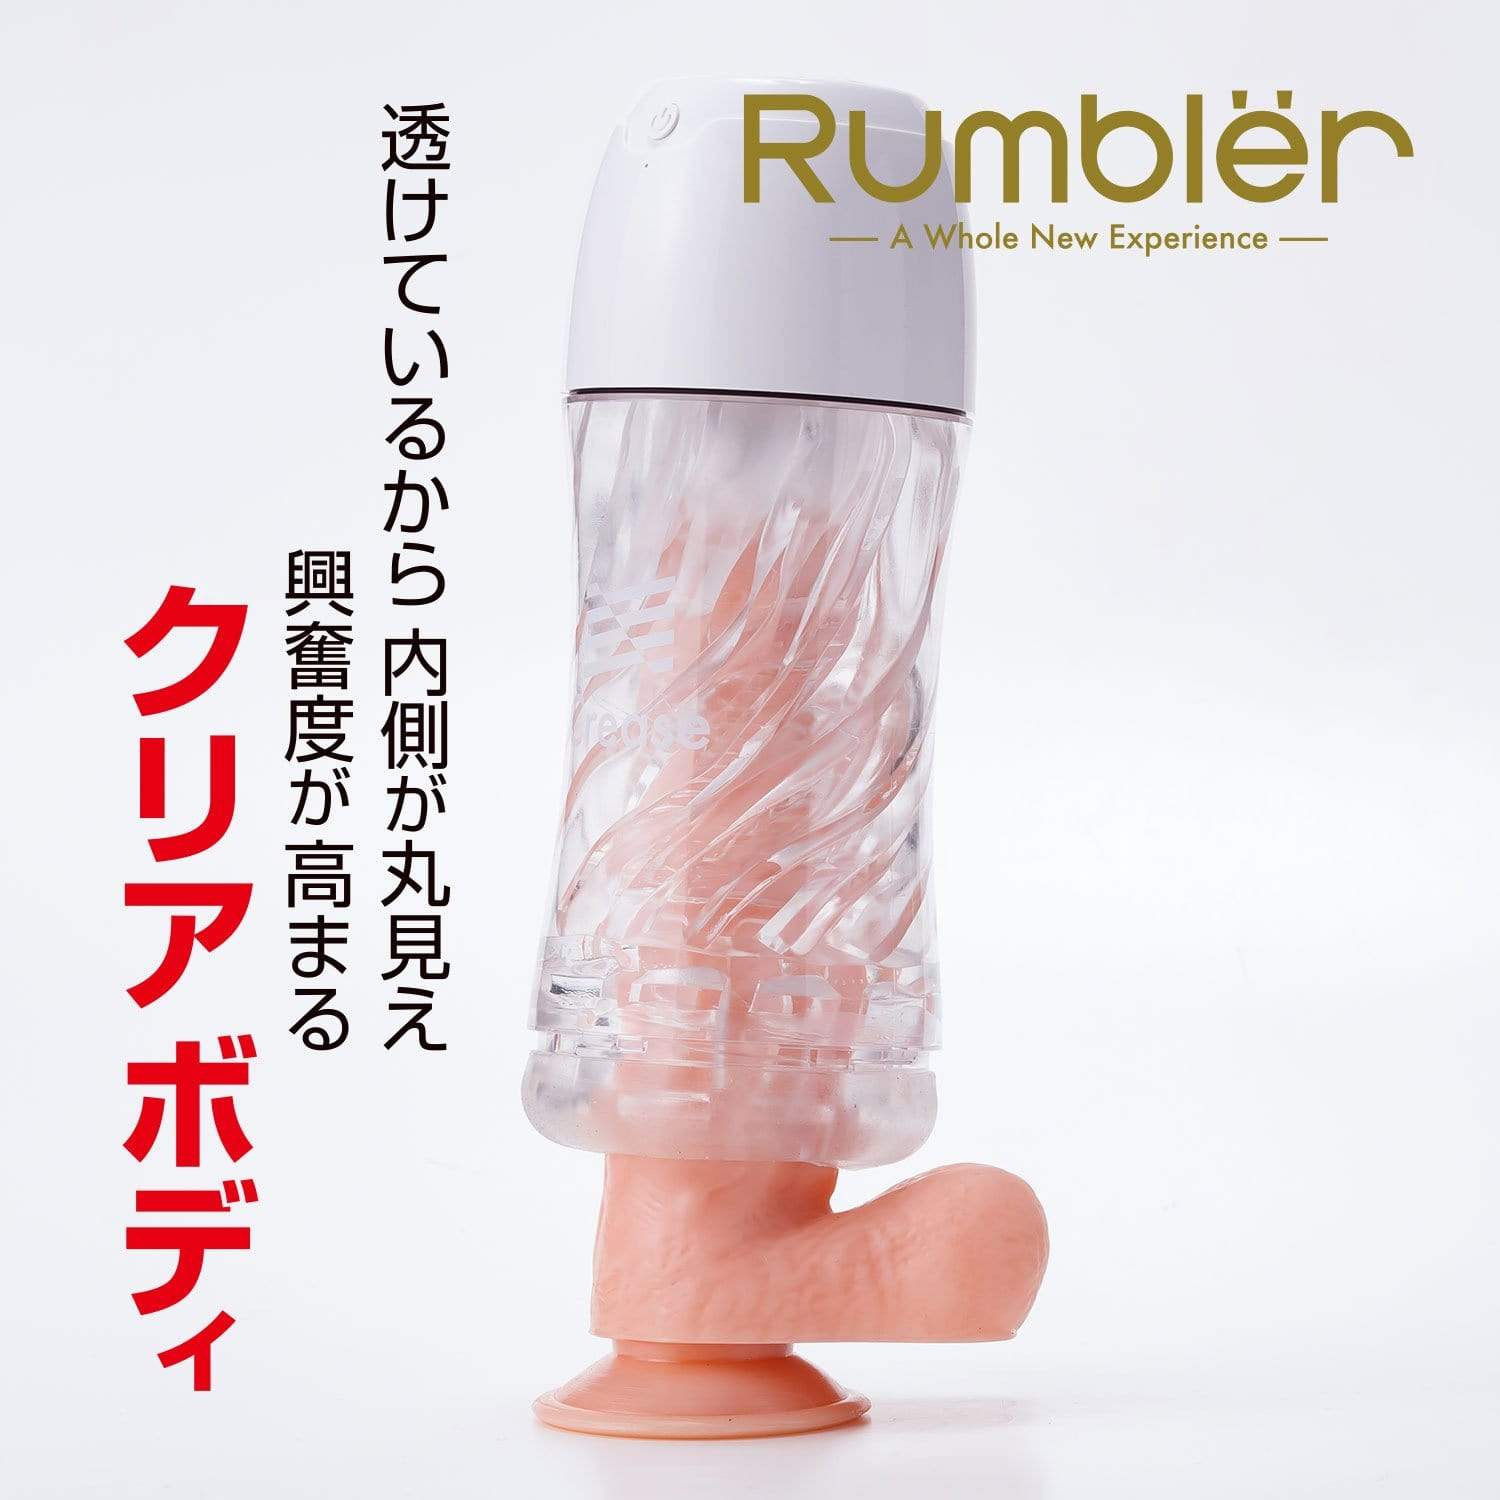 Kuudom - Rambler Pyramid Rechargeable Masturbator (White) Masturbator Soft Stroker (Vibration) Rechargeable 346238060 CherryAffairs